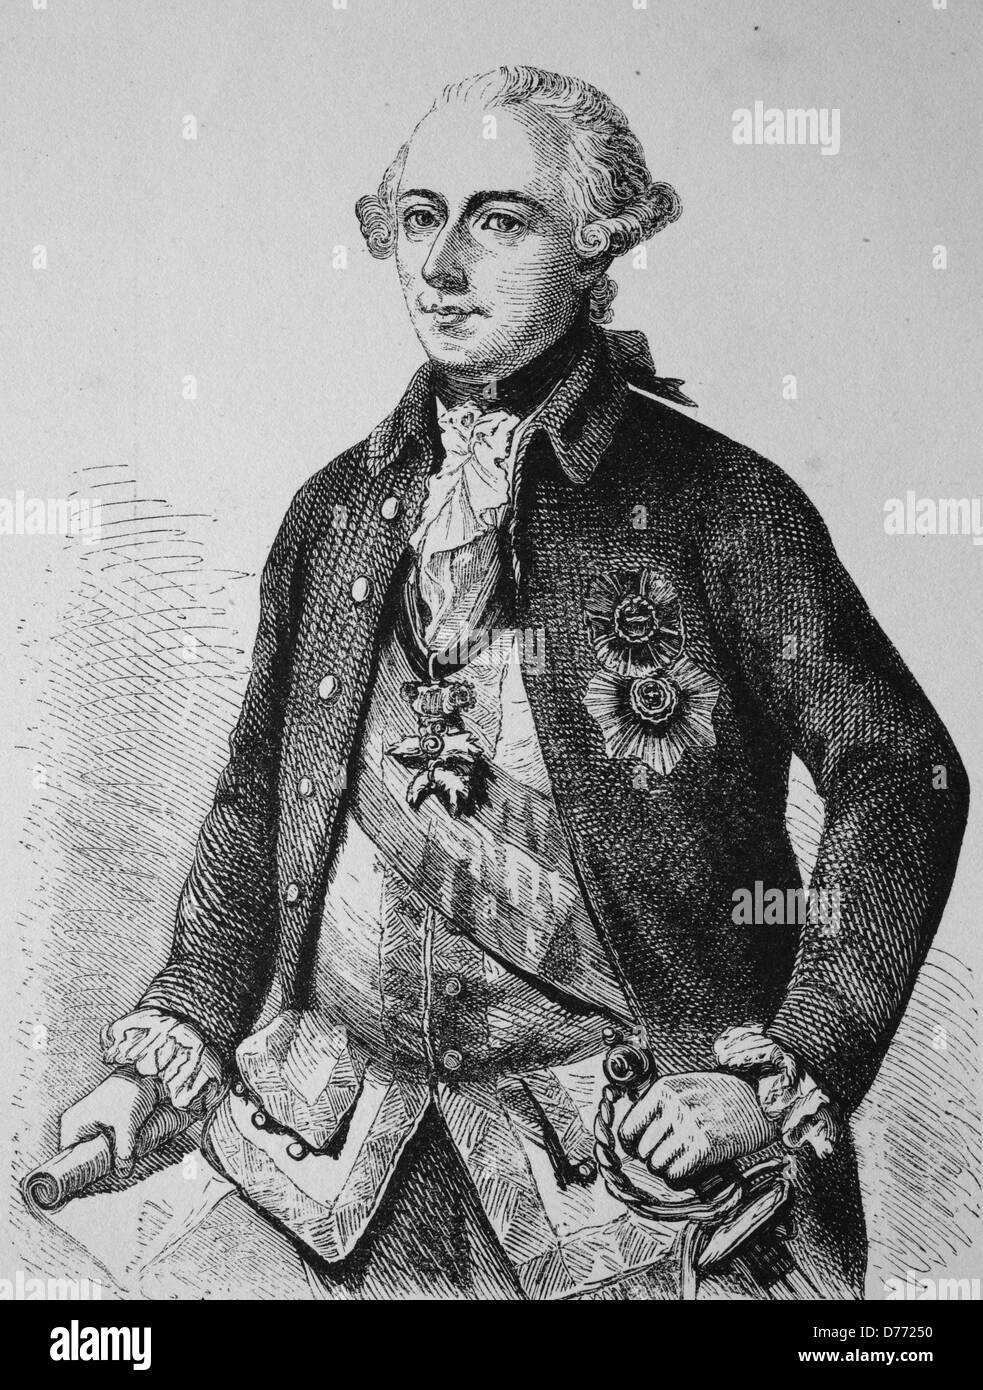 Joseph II of Austria, 1741 - 1790, Holy Roman Emperor, woodcut from 1880 Stock Photo